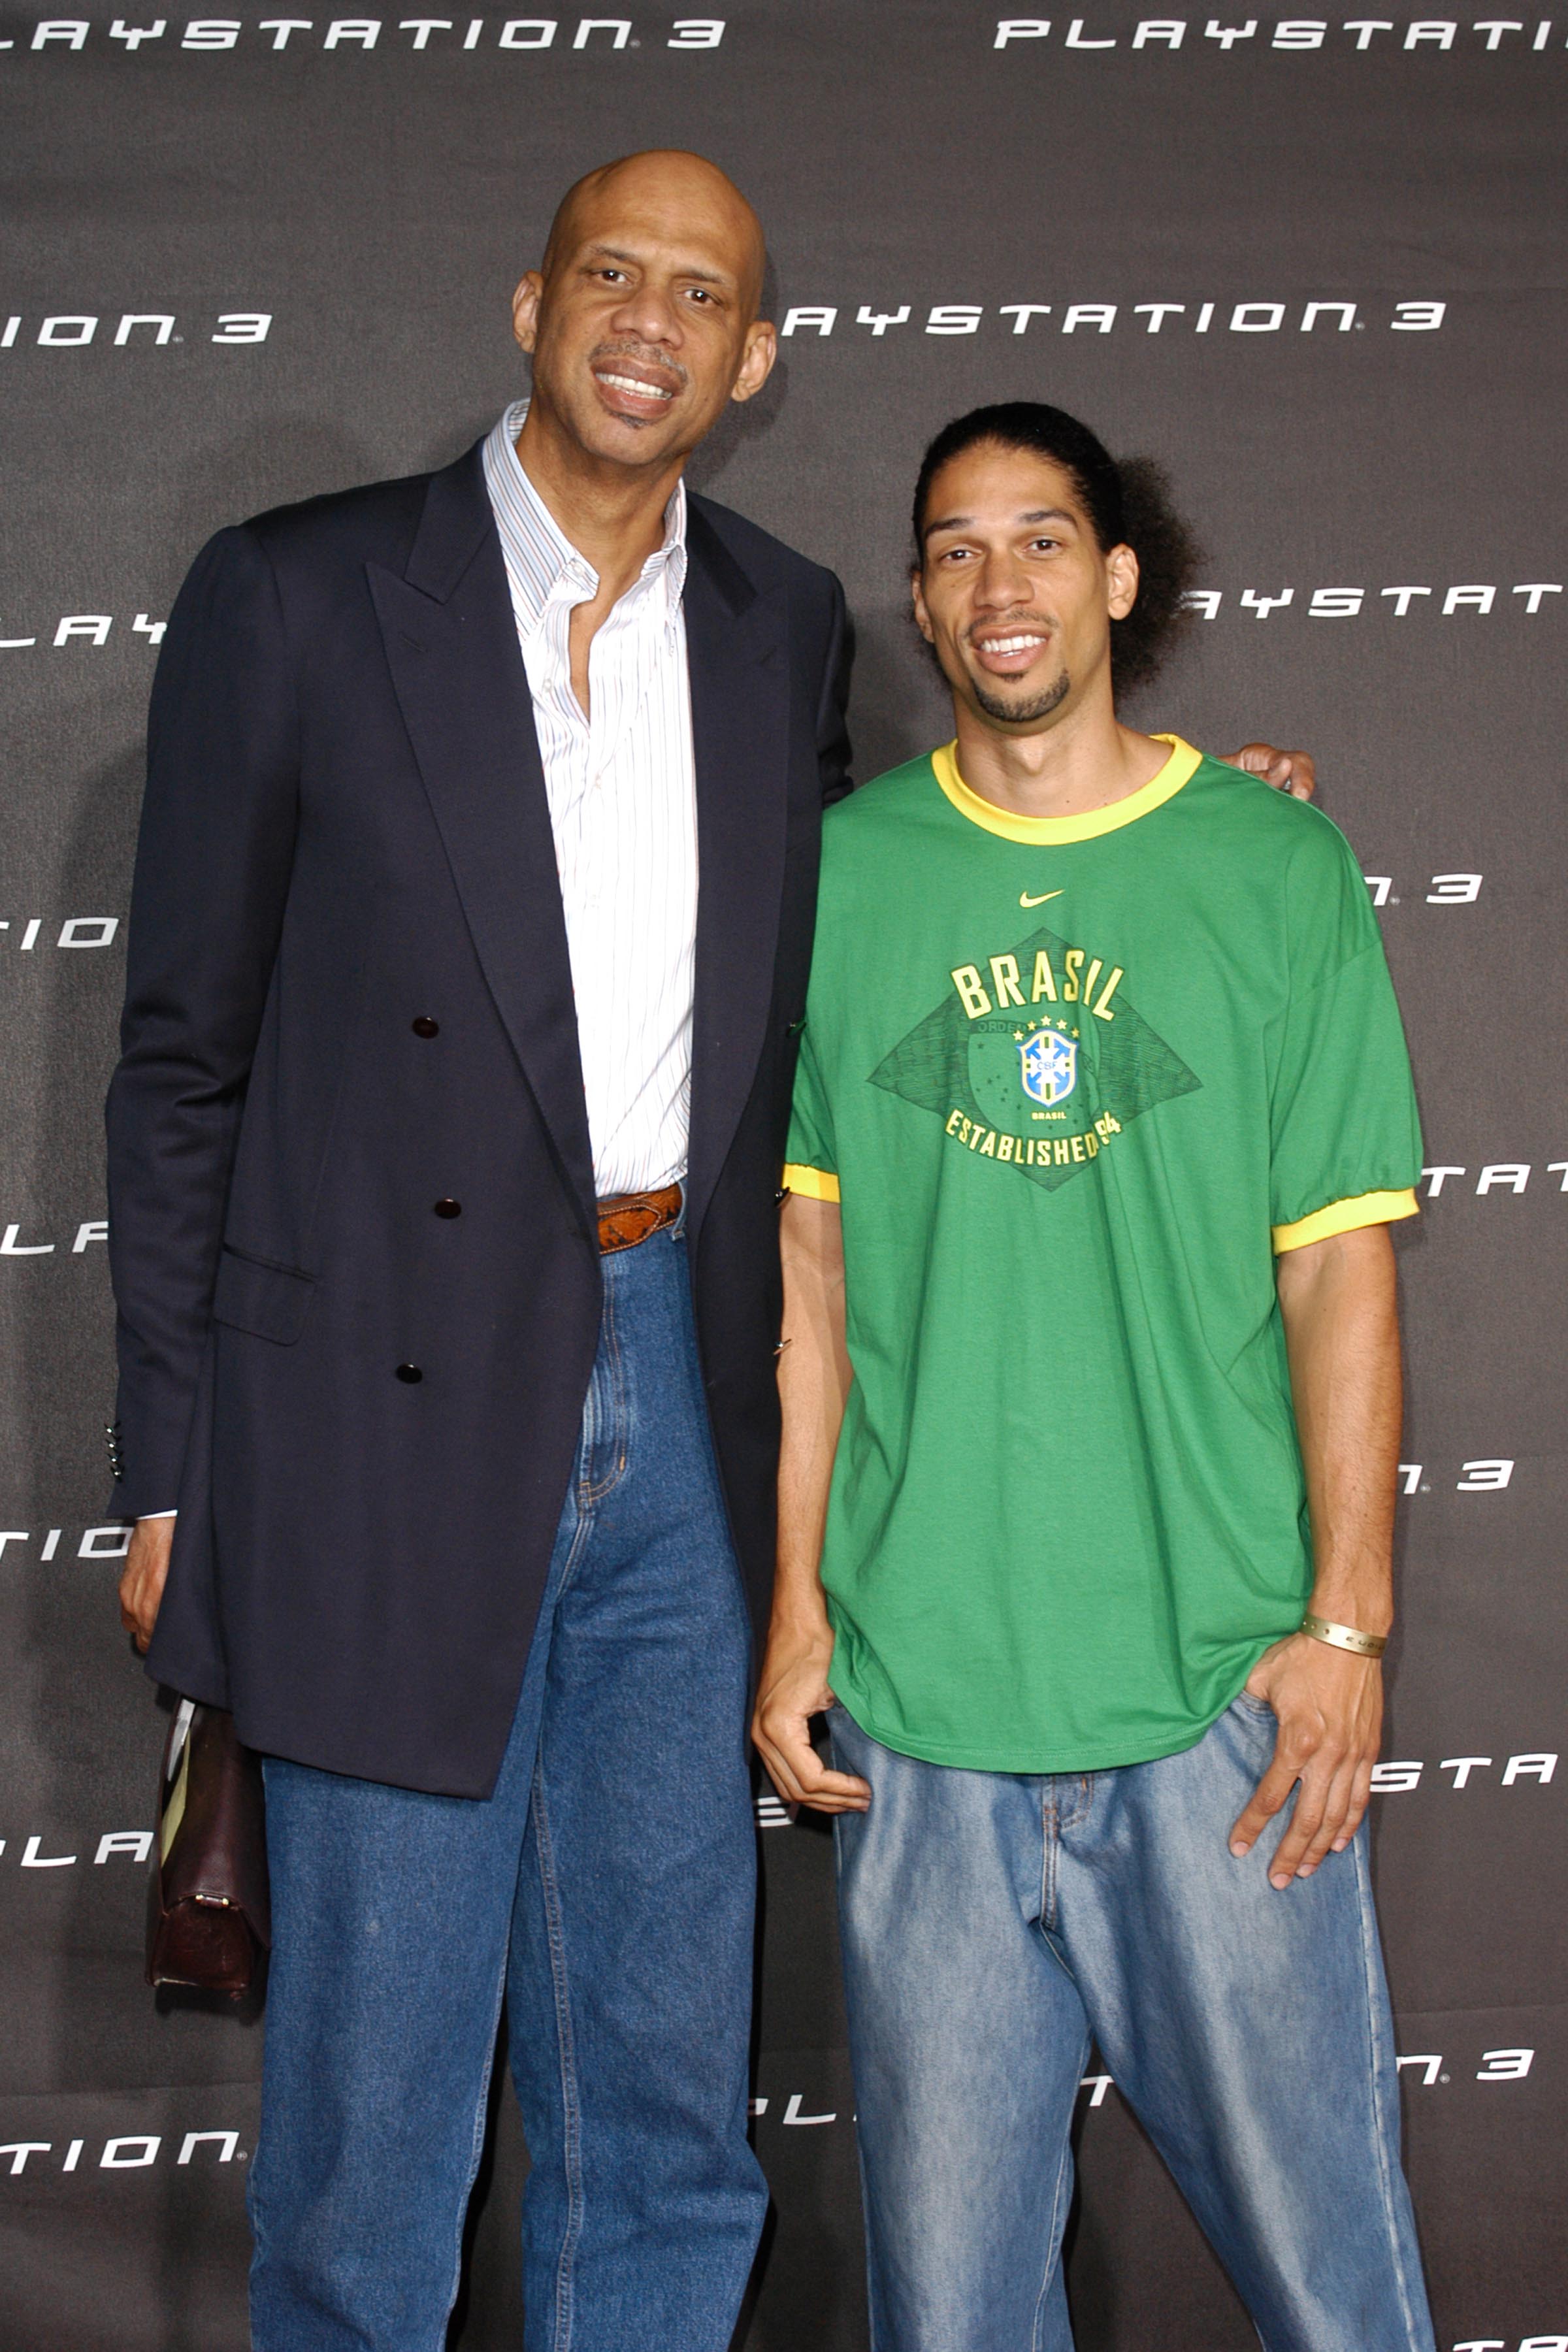 Kareem and Kareem Abdul-Jabbar Jr. at a PlayStation 3 celebration on November 8, 2006, in California. | Source: Getty Images